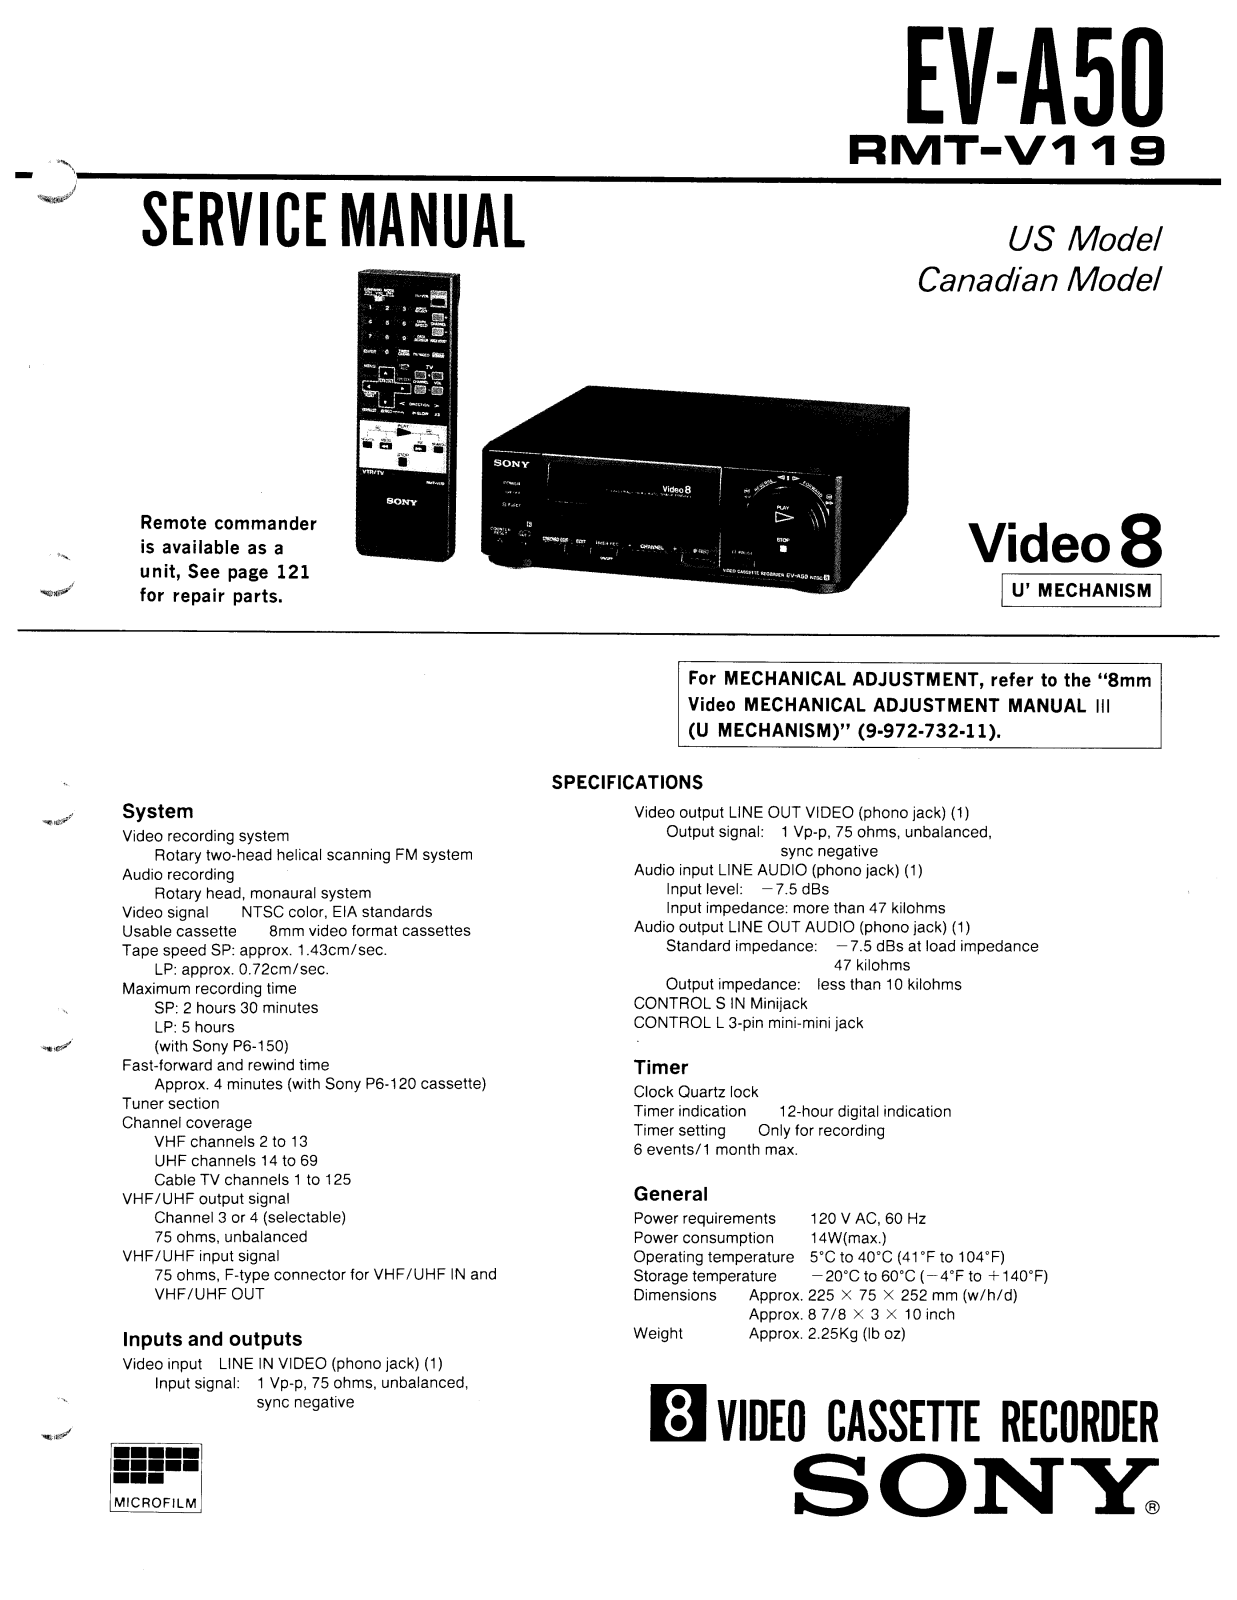 SONY EV-A50 Service Manual